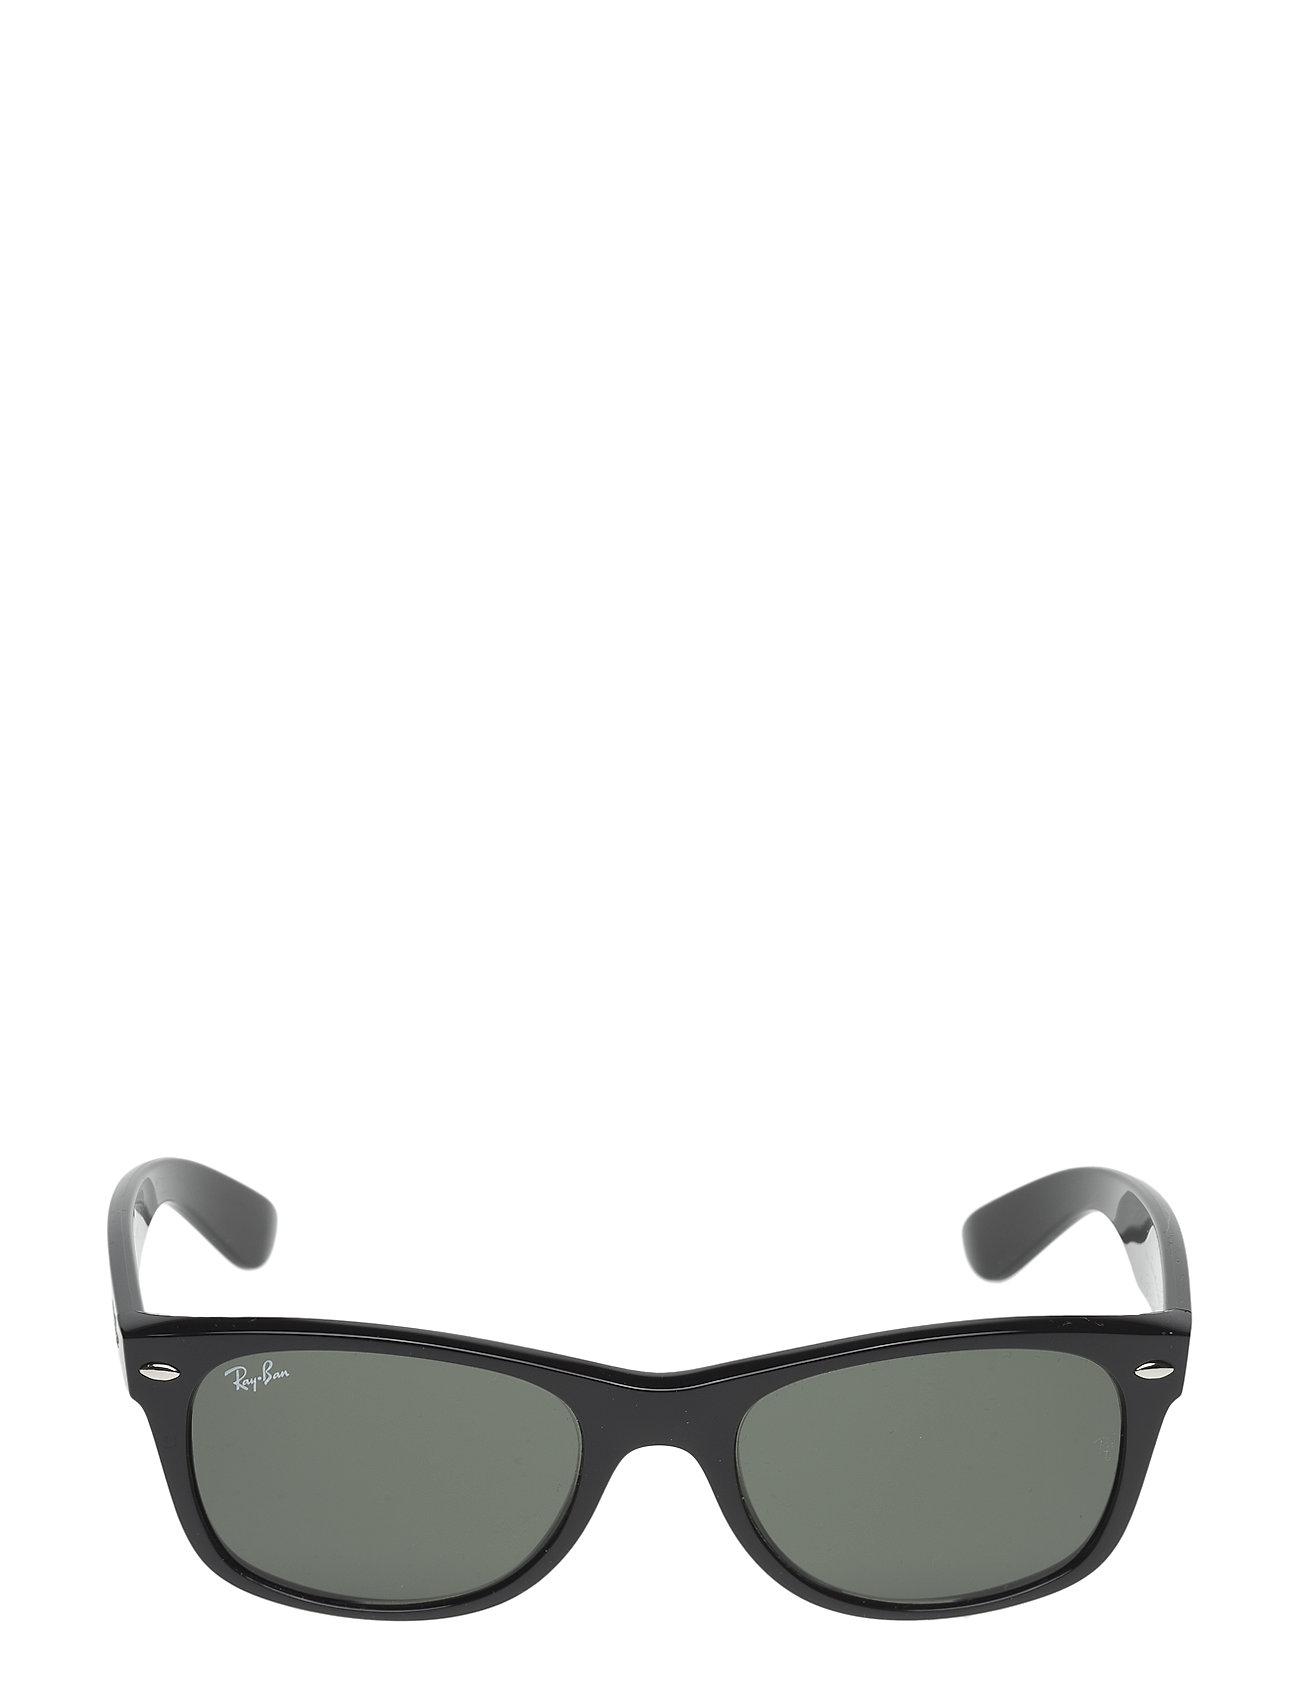 Ray-Ban "New Wayfarer Designers Sunglasses D-frame- Black Ray-Ban"